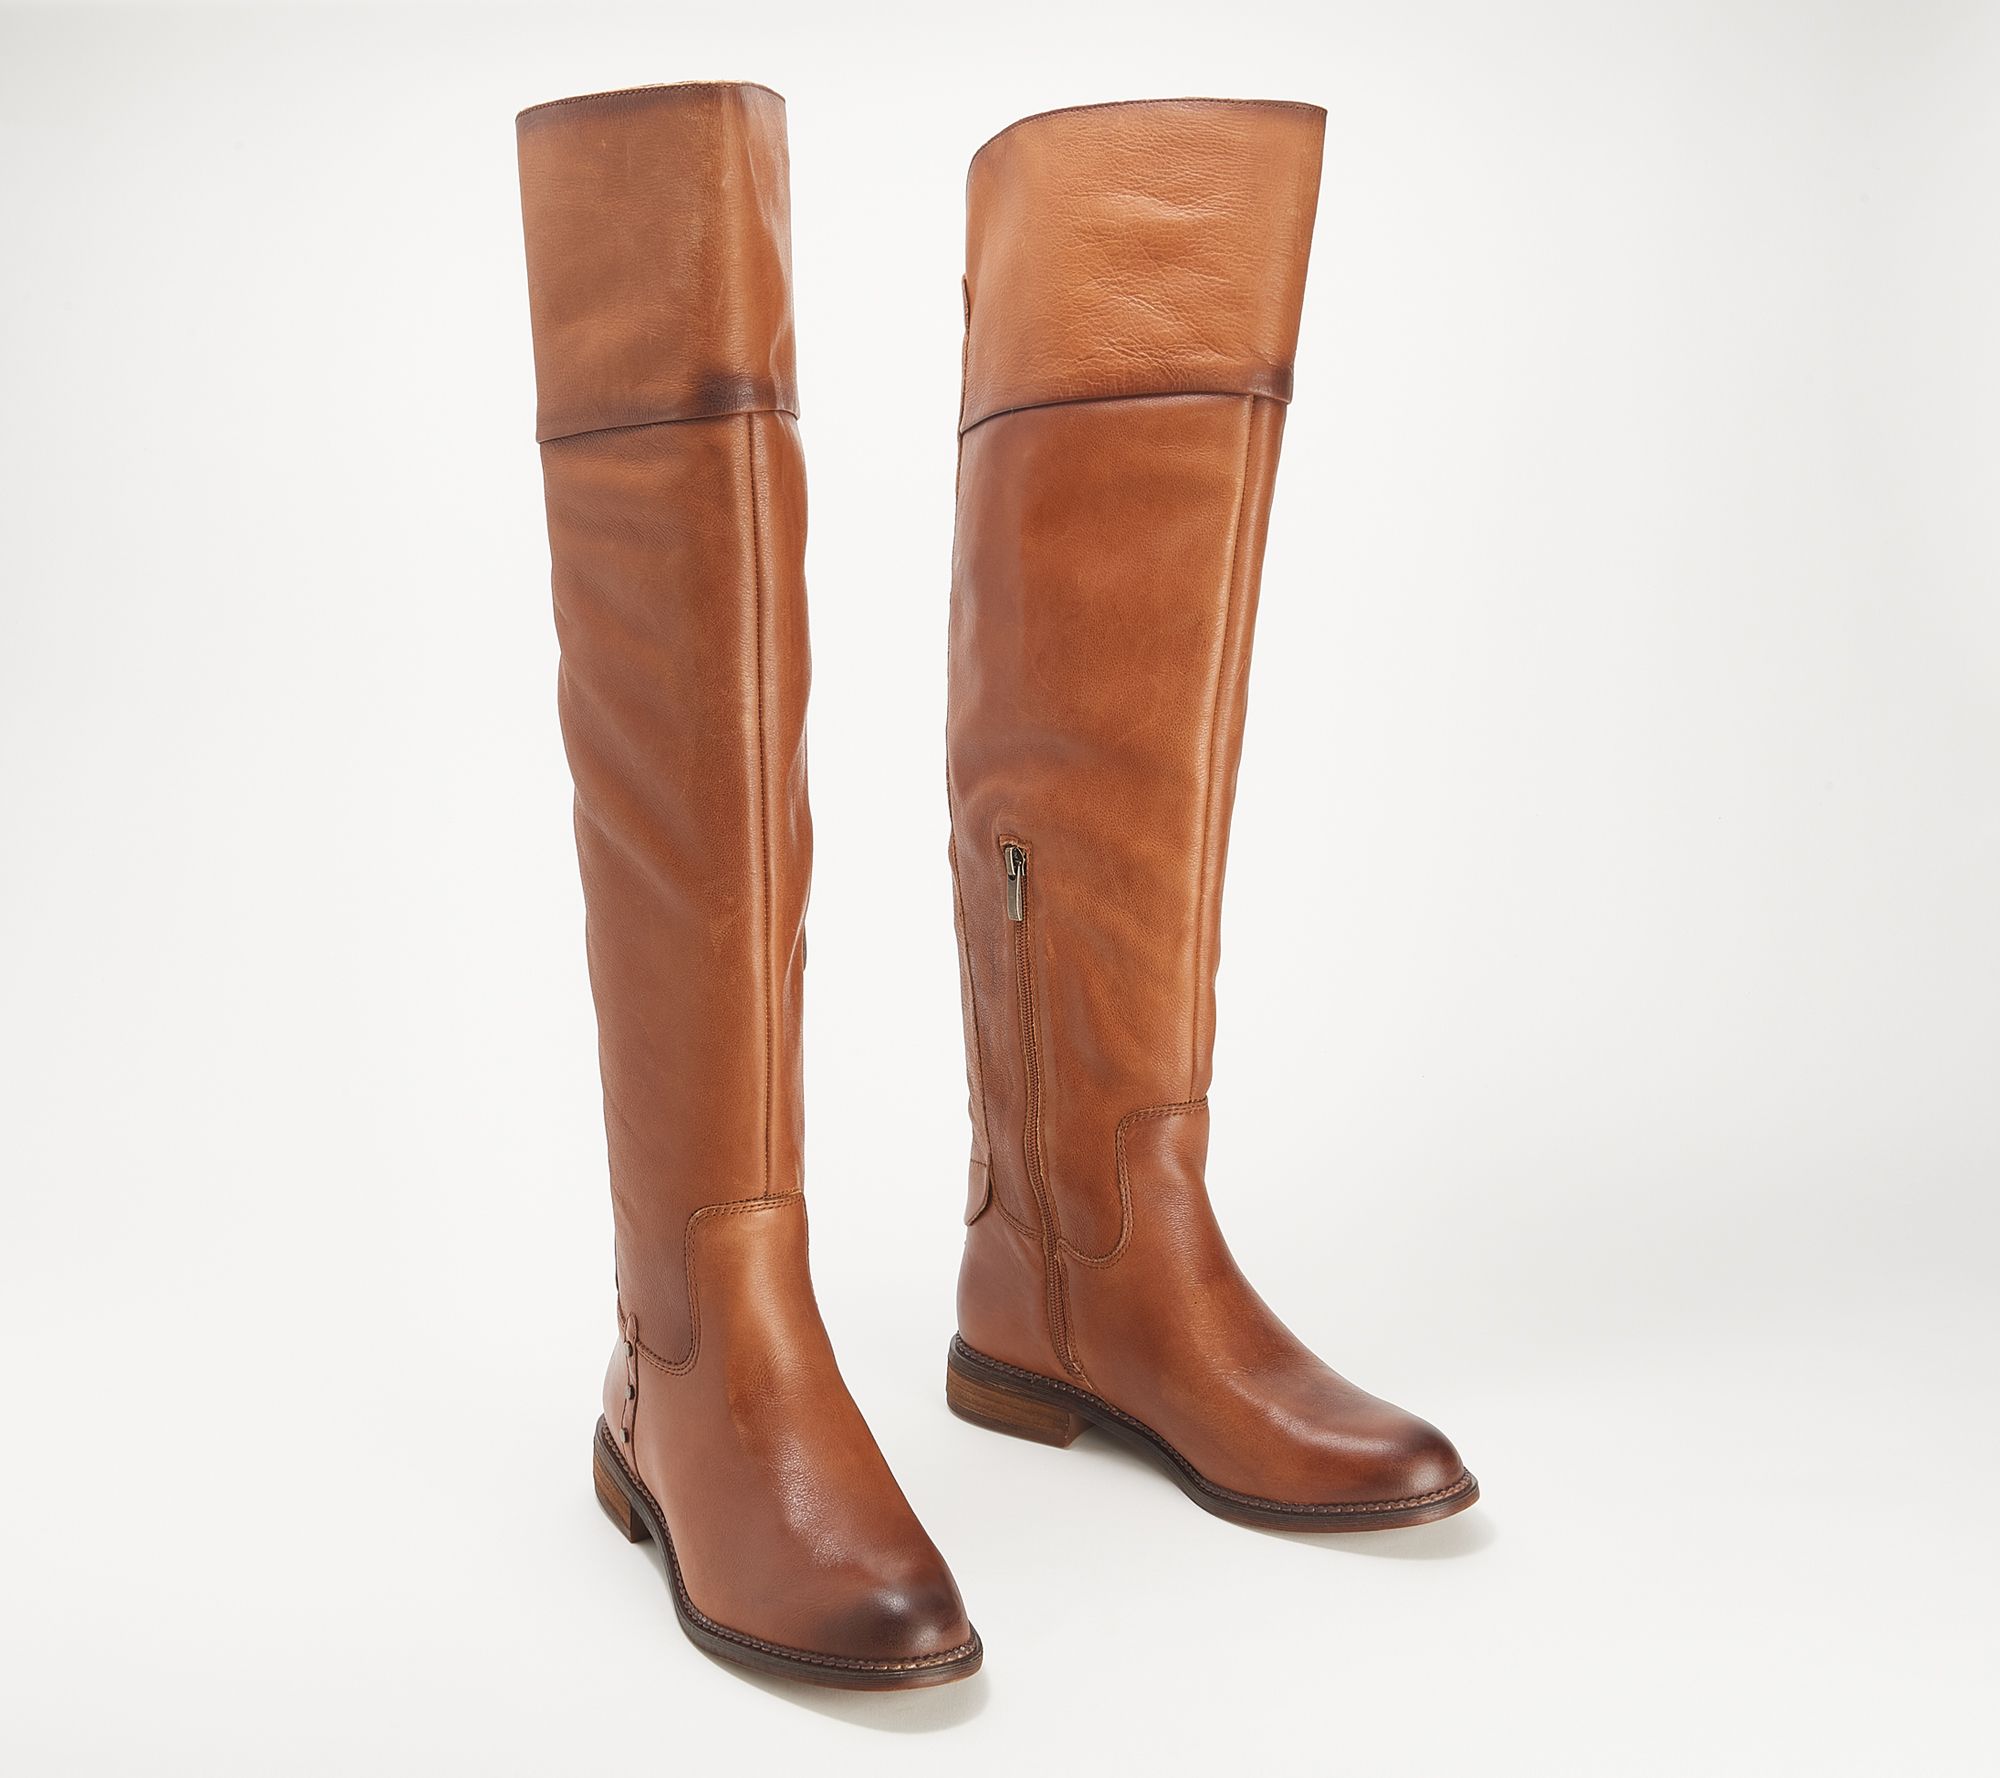 11 Best Narrow calf boots ideas  narrow calf boots, boots, calves